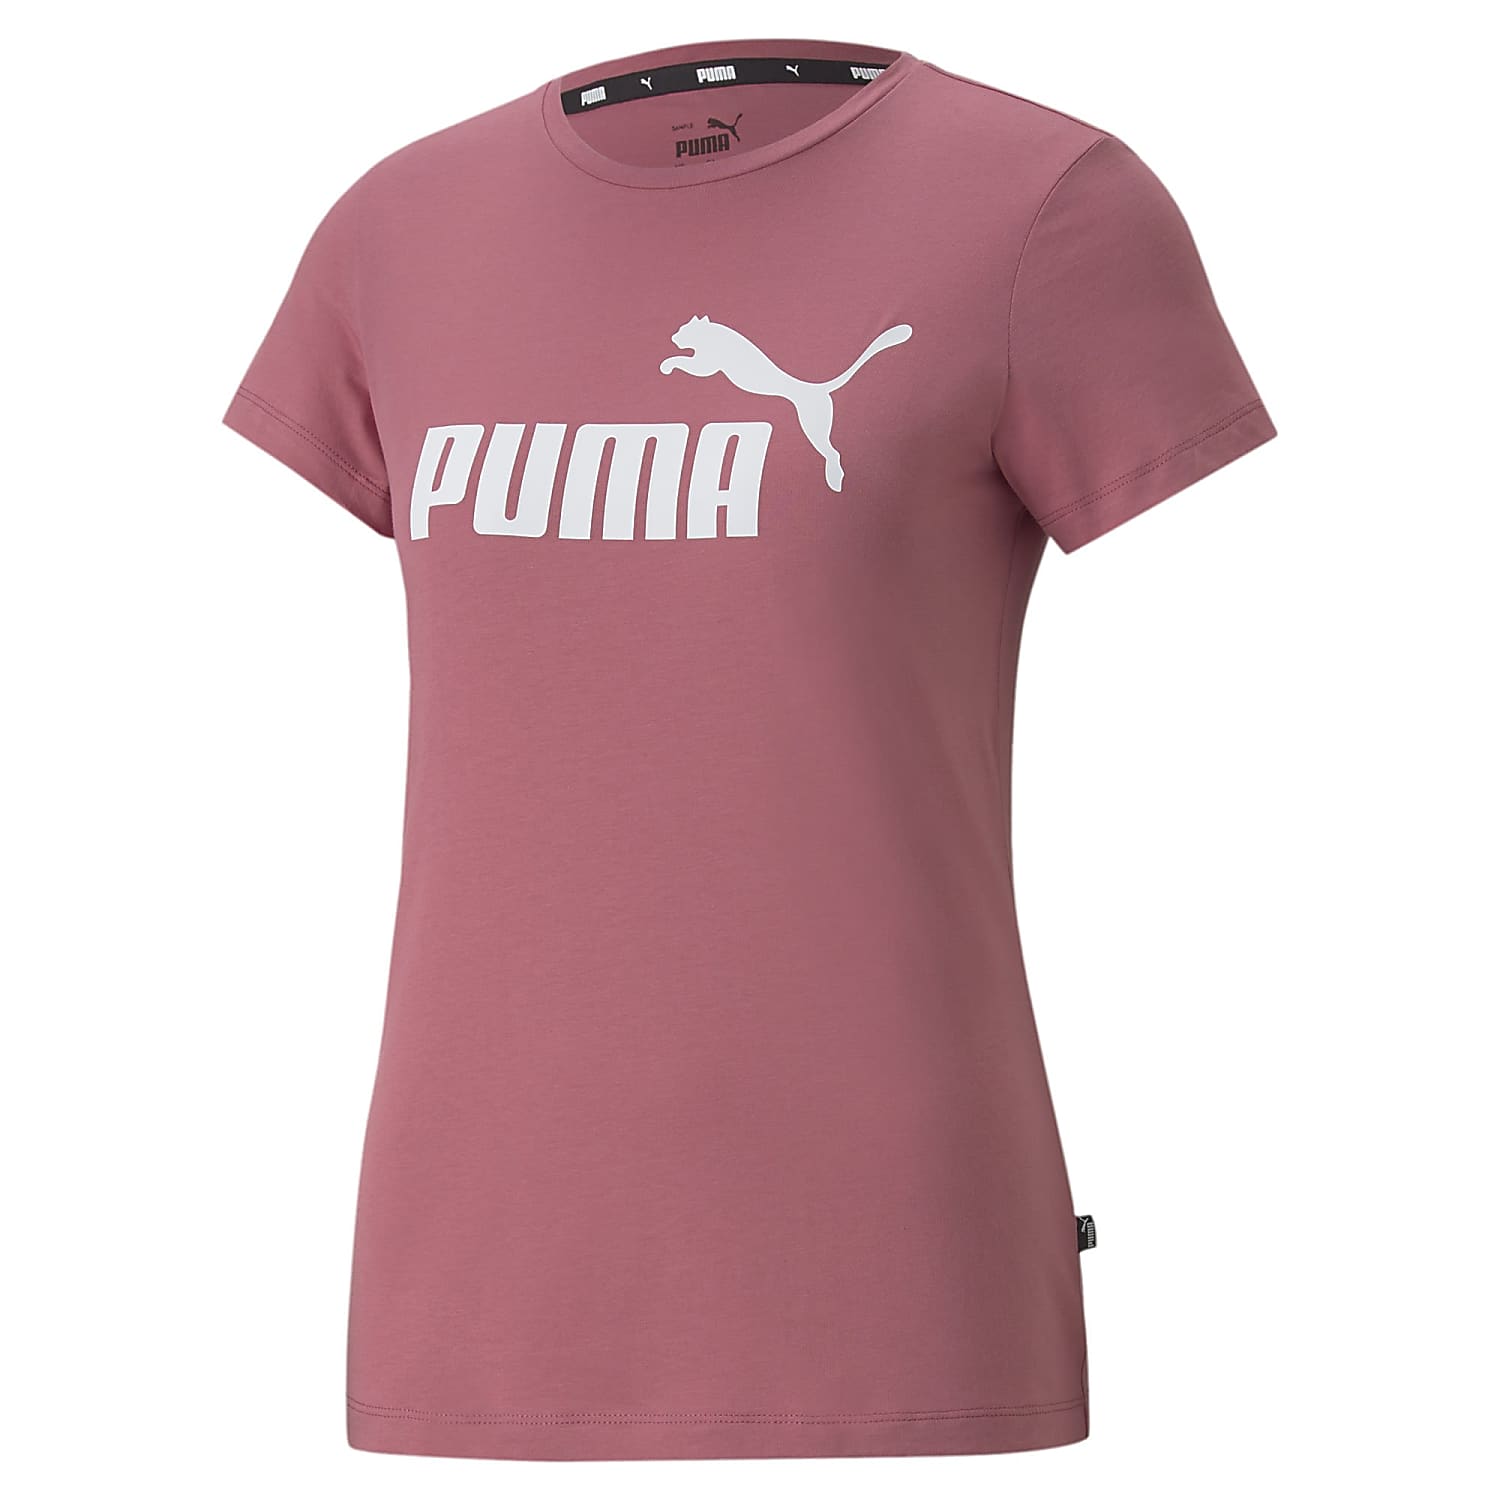 Buy Puma W ESSENTIALS LOGO TEE, Dusty Orchid online now